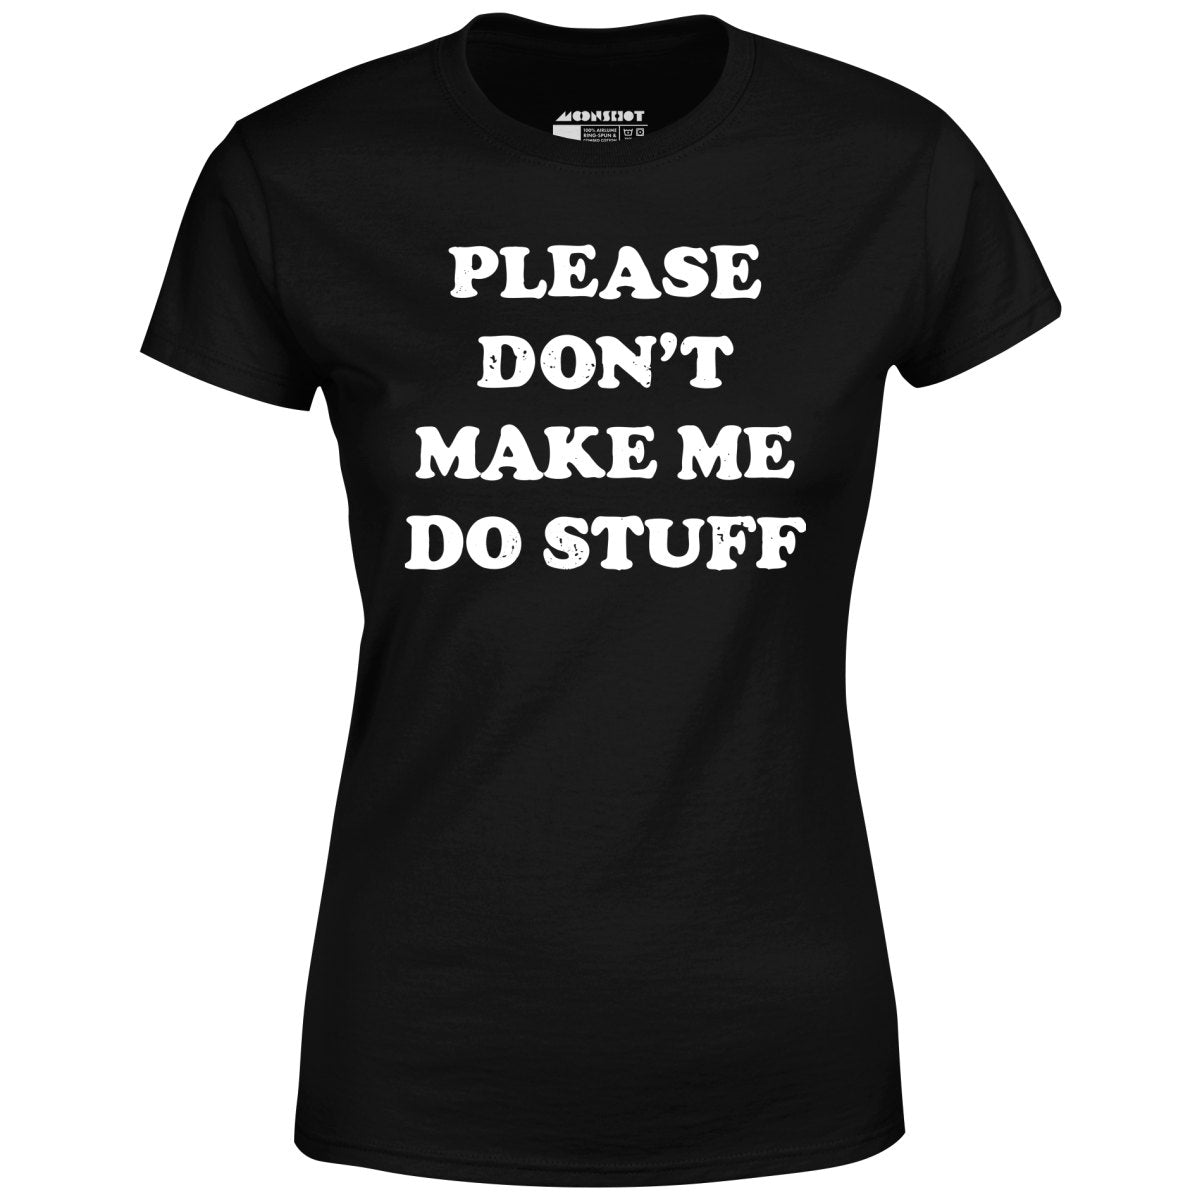 Please Don't Make Me Do Stuff - Women's T-Shirt